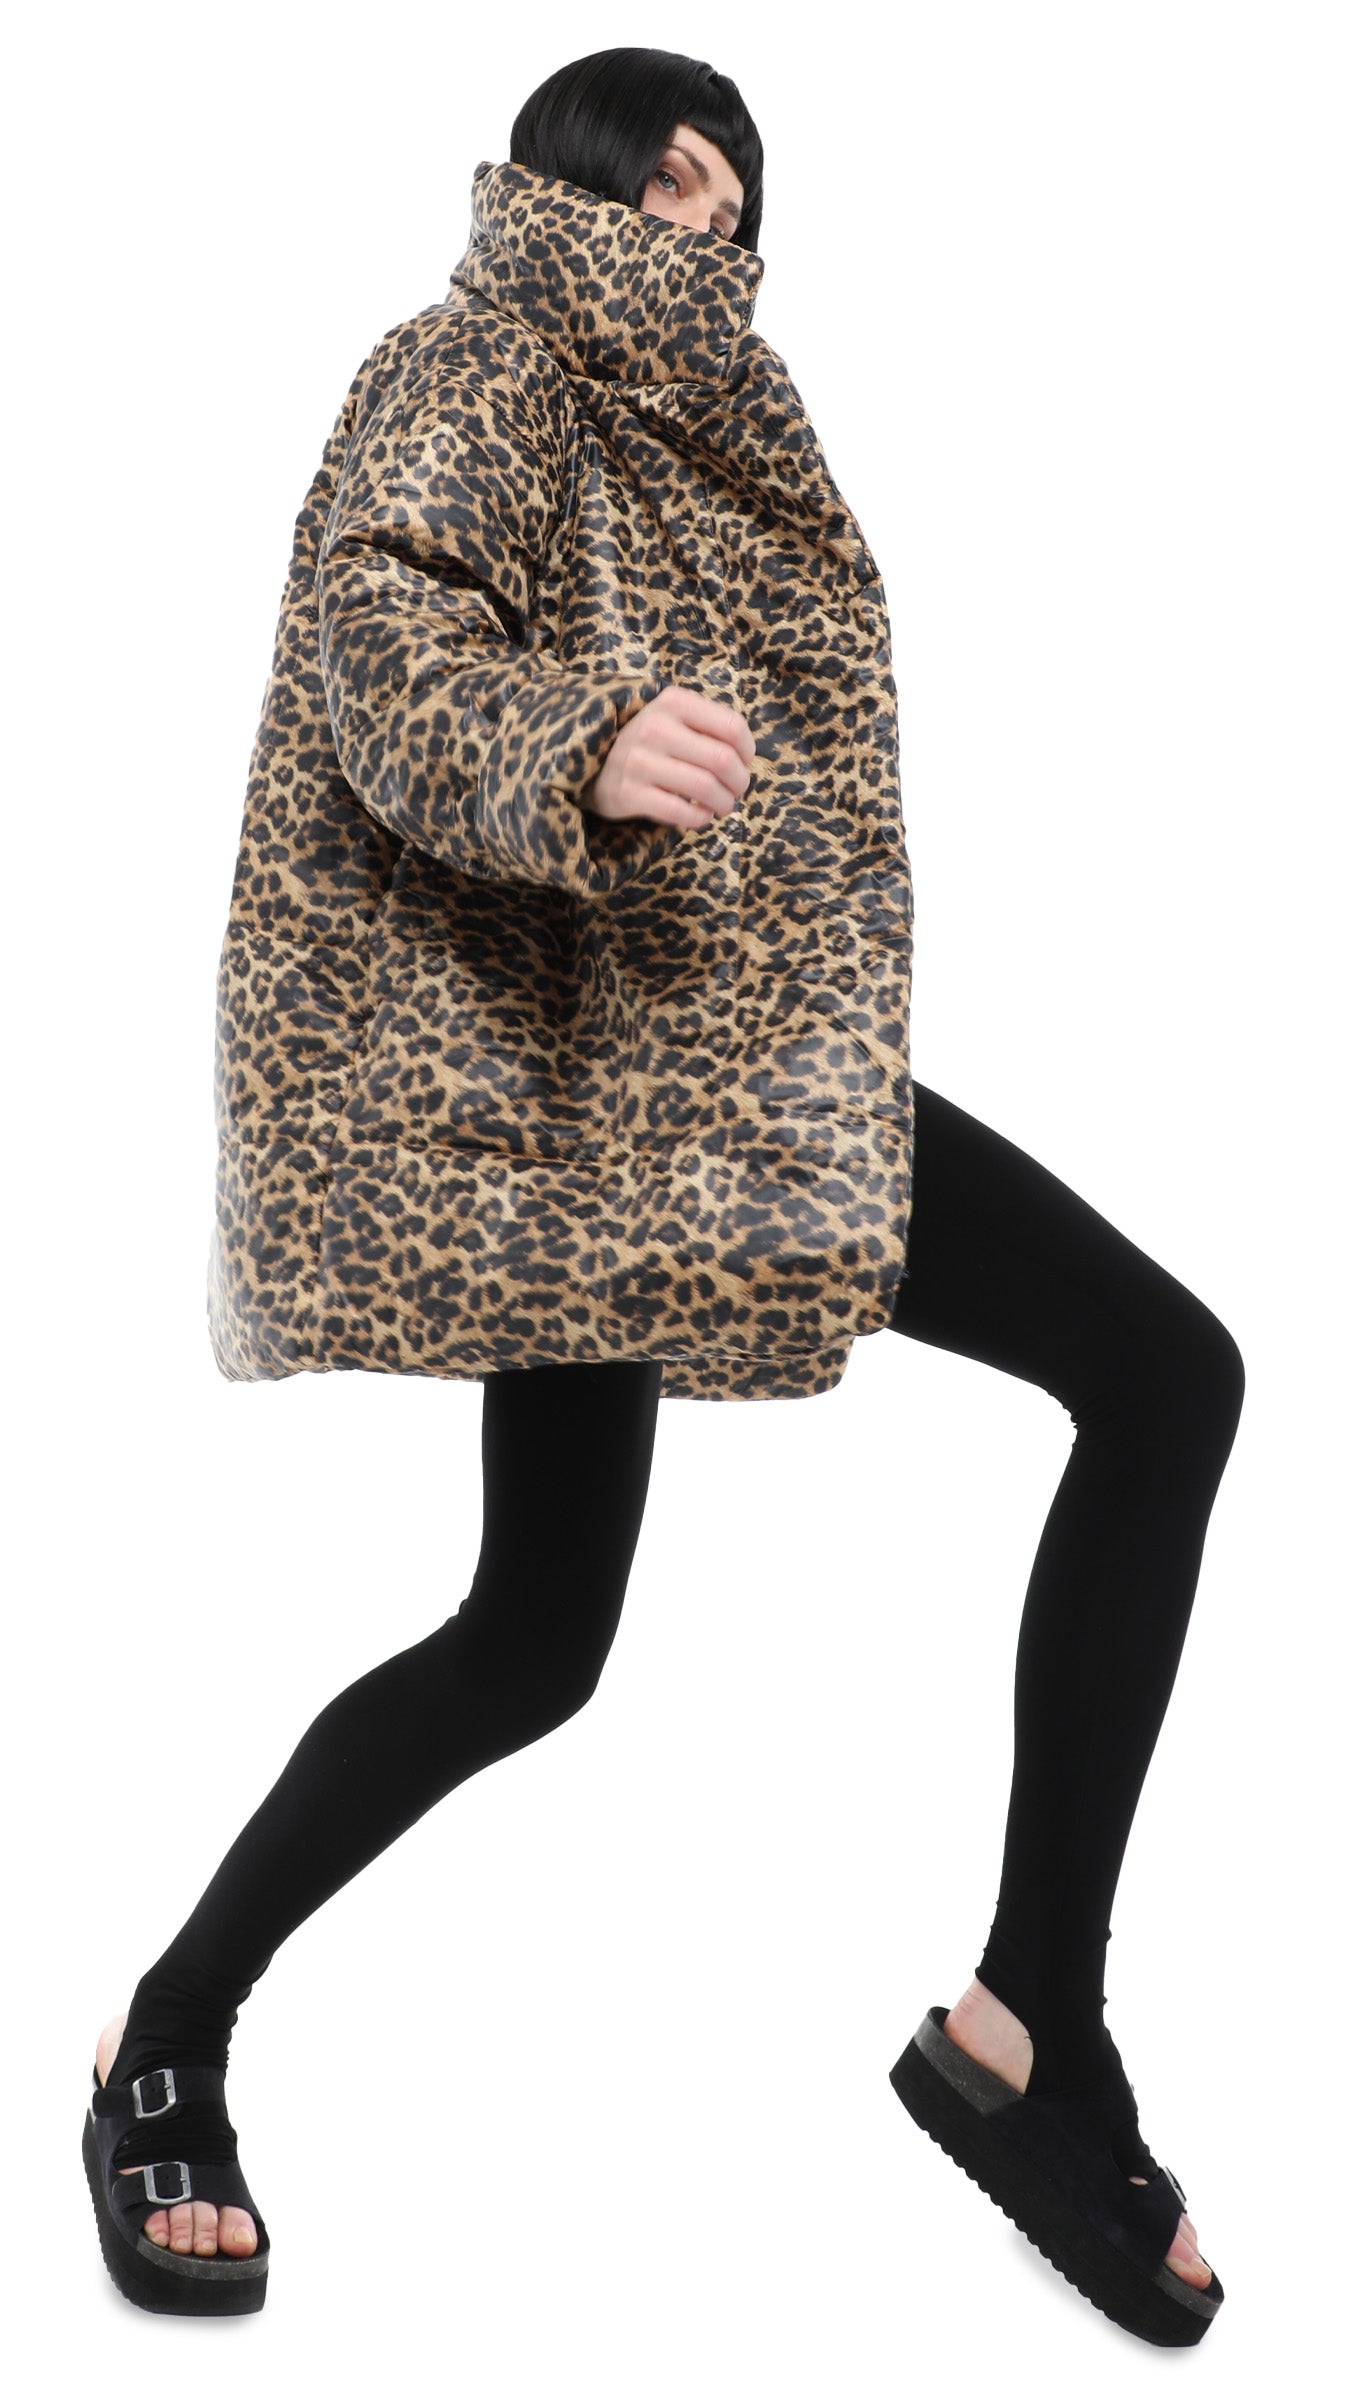 Norma Kamali Sleeping Bag Leopard-print Coat in Brown